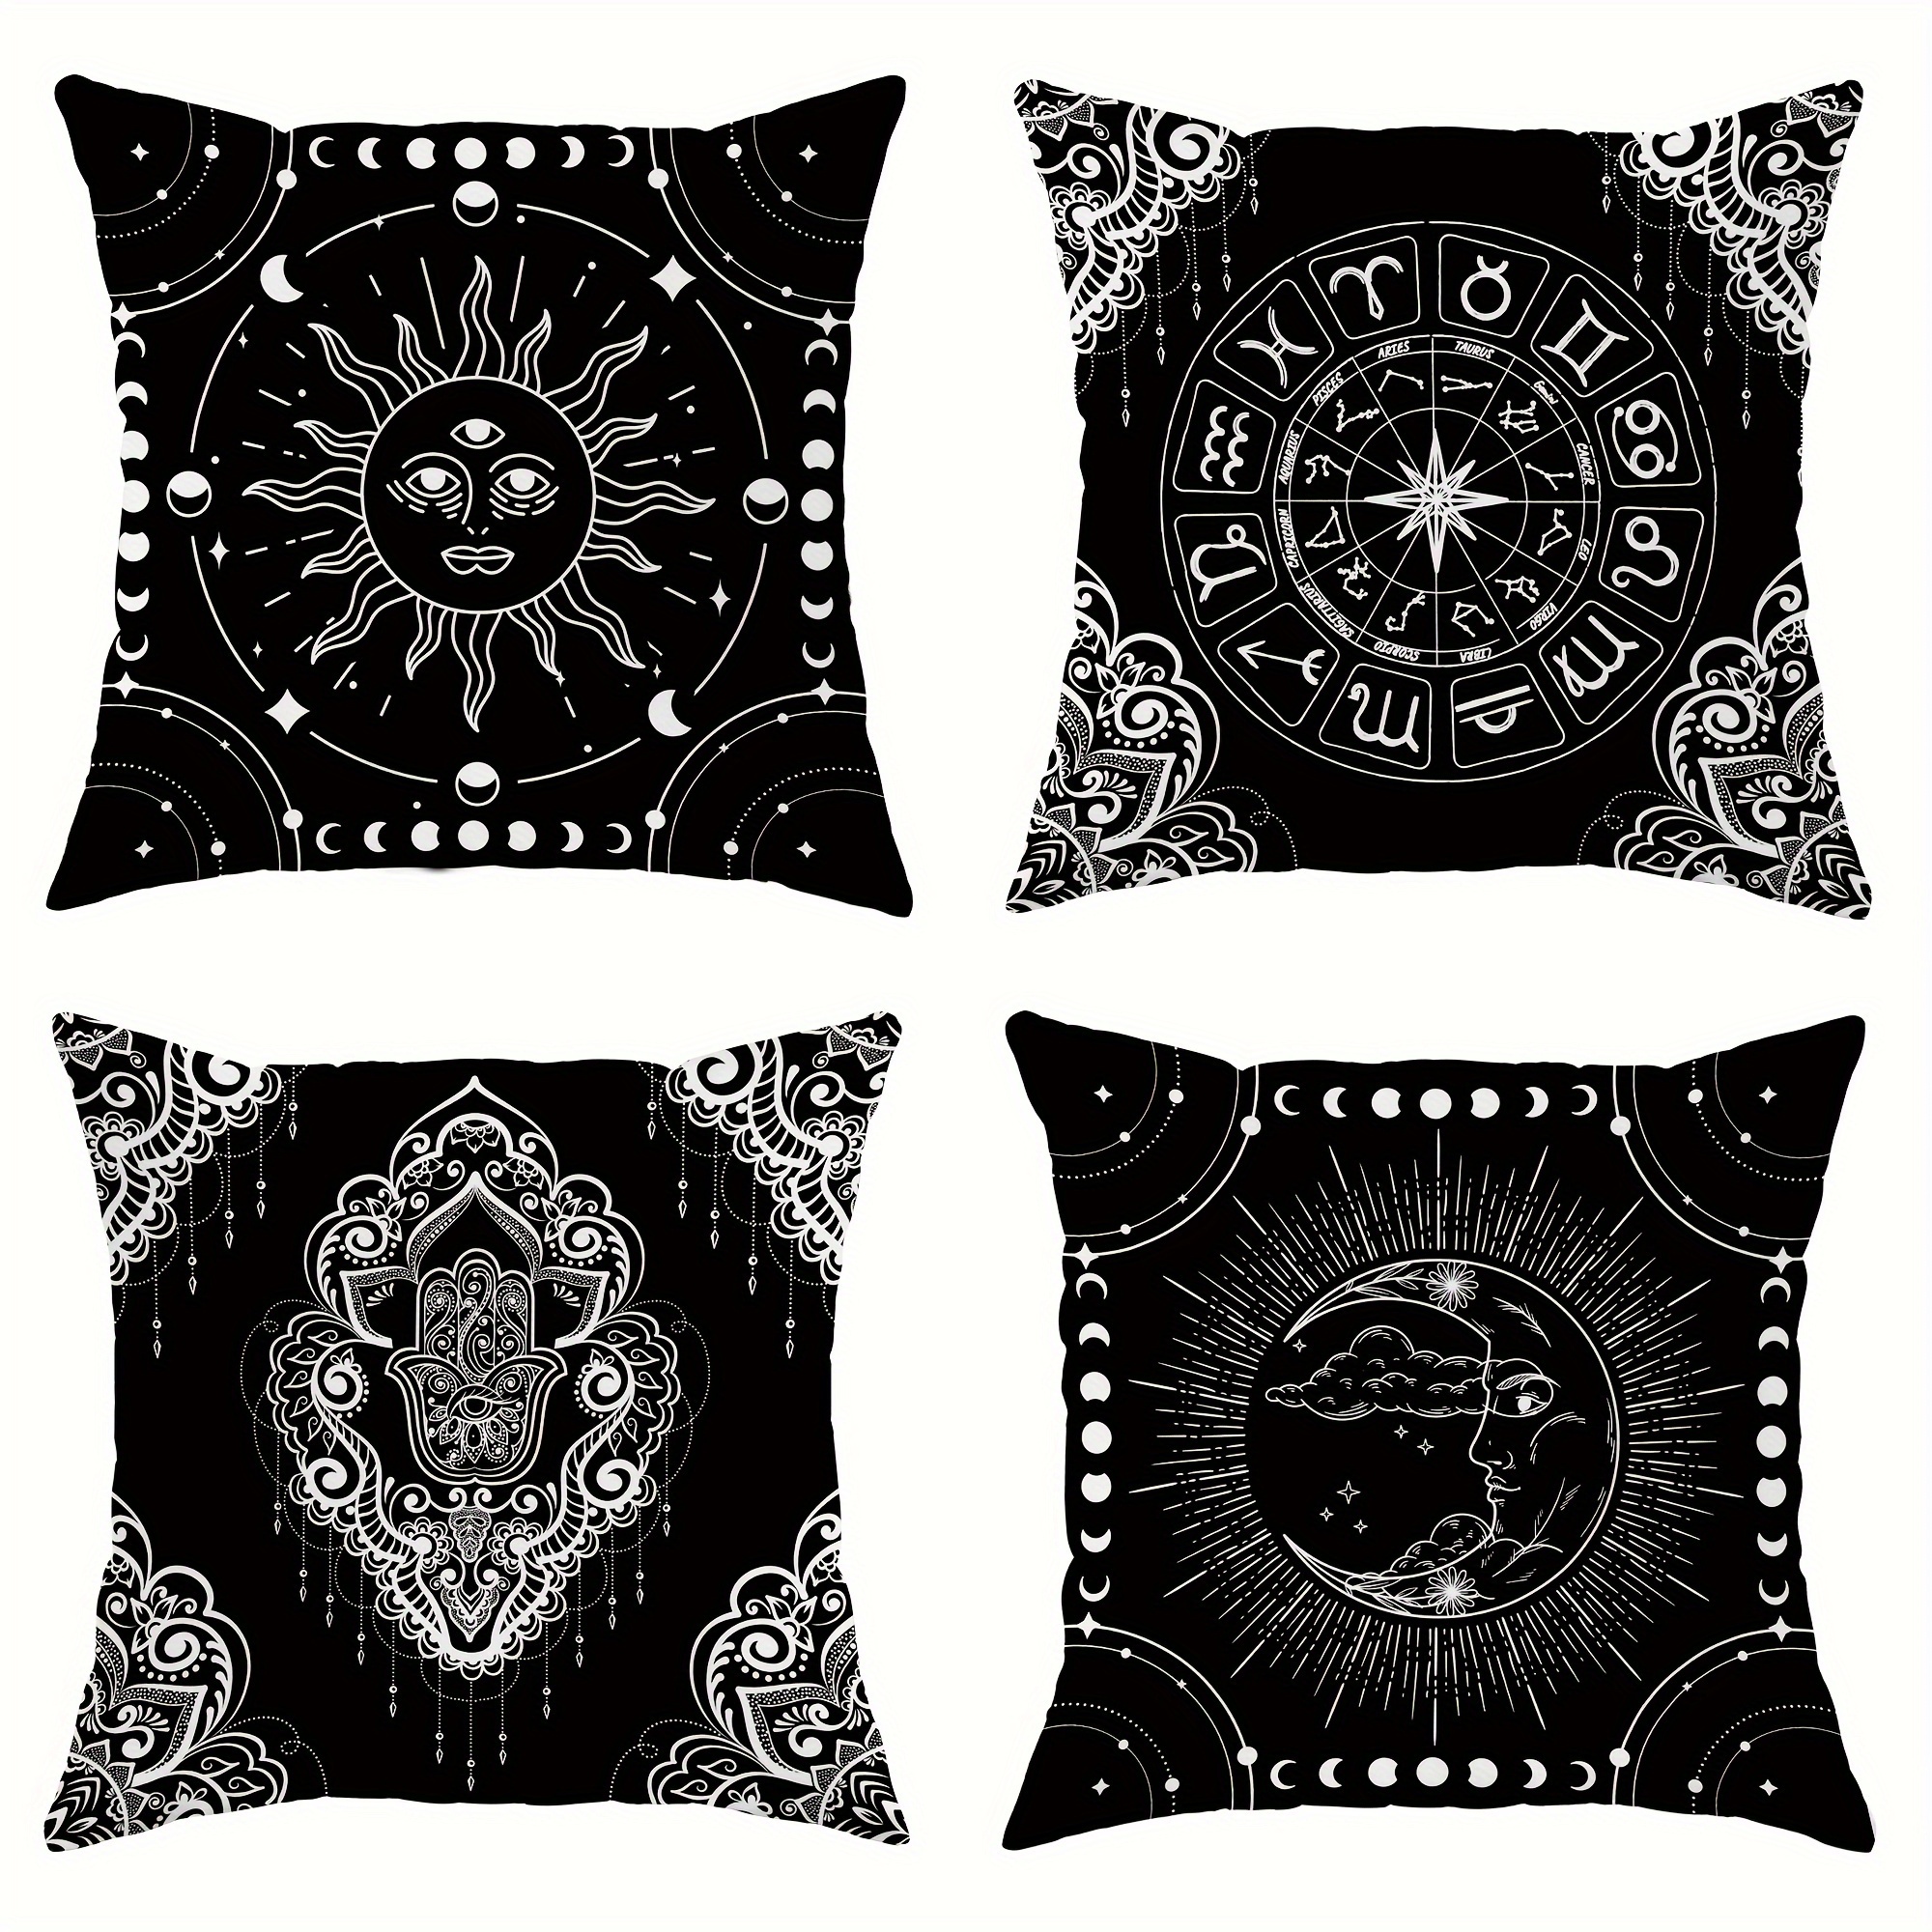 

4-piece Set Velvet Throw Pillow Covers - Bohemian Sun & Moon, Farmer's Hand Floral Design In Black & White, 18x18 Inch - Perfect For Living Room, Bedroom, Sofa Decor